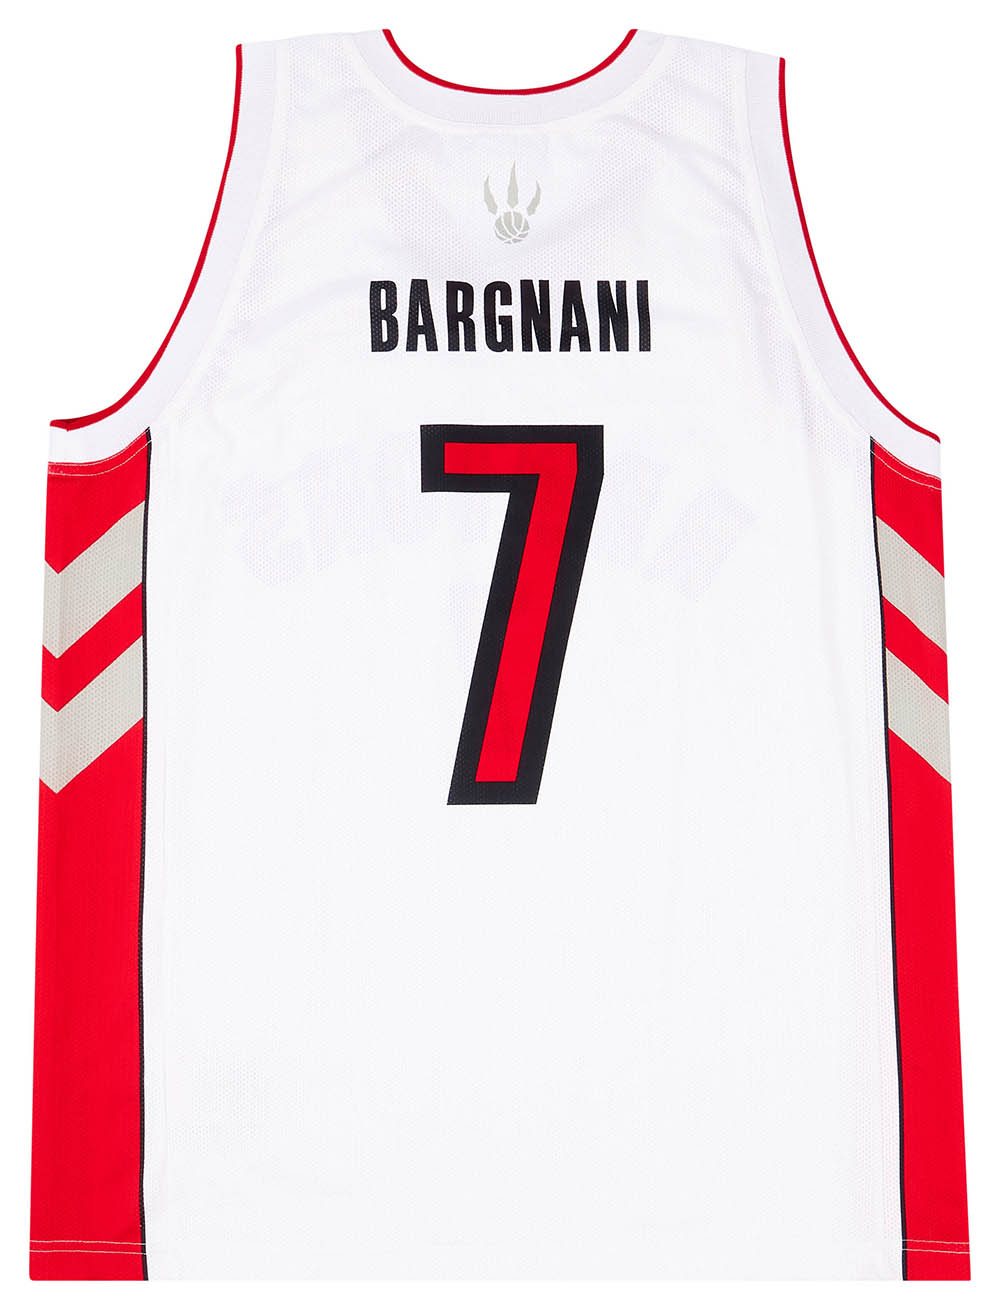 2006-10 Toronto Raptors Bargnani #7 Champion Home Jersey (Excellent) L